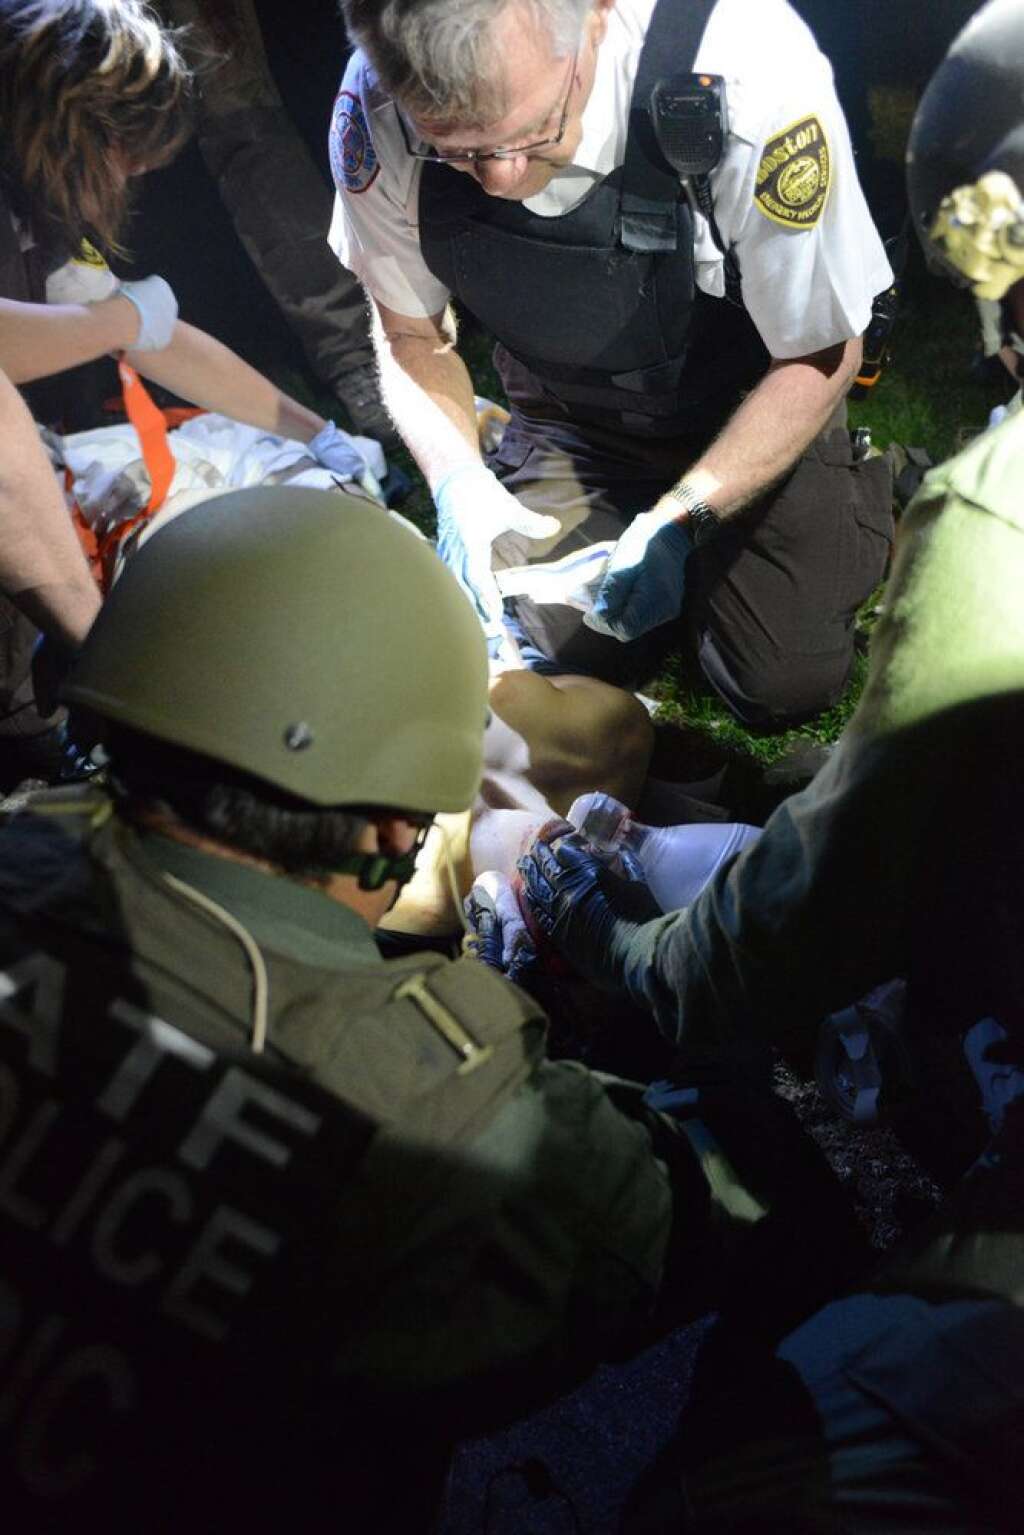 New Boston Bombing Arrest Photos - <a href="http://www.bostonmagazine.com/news/article/2013/08/27/dzhokhar-tsarnaev-manhunt-photos/1/">Dzhokhar Tsarnaev</a>. (Sean Murphy / Massachusetts State Police)